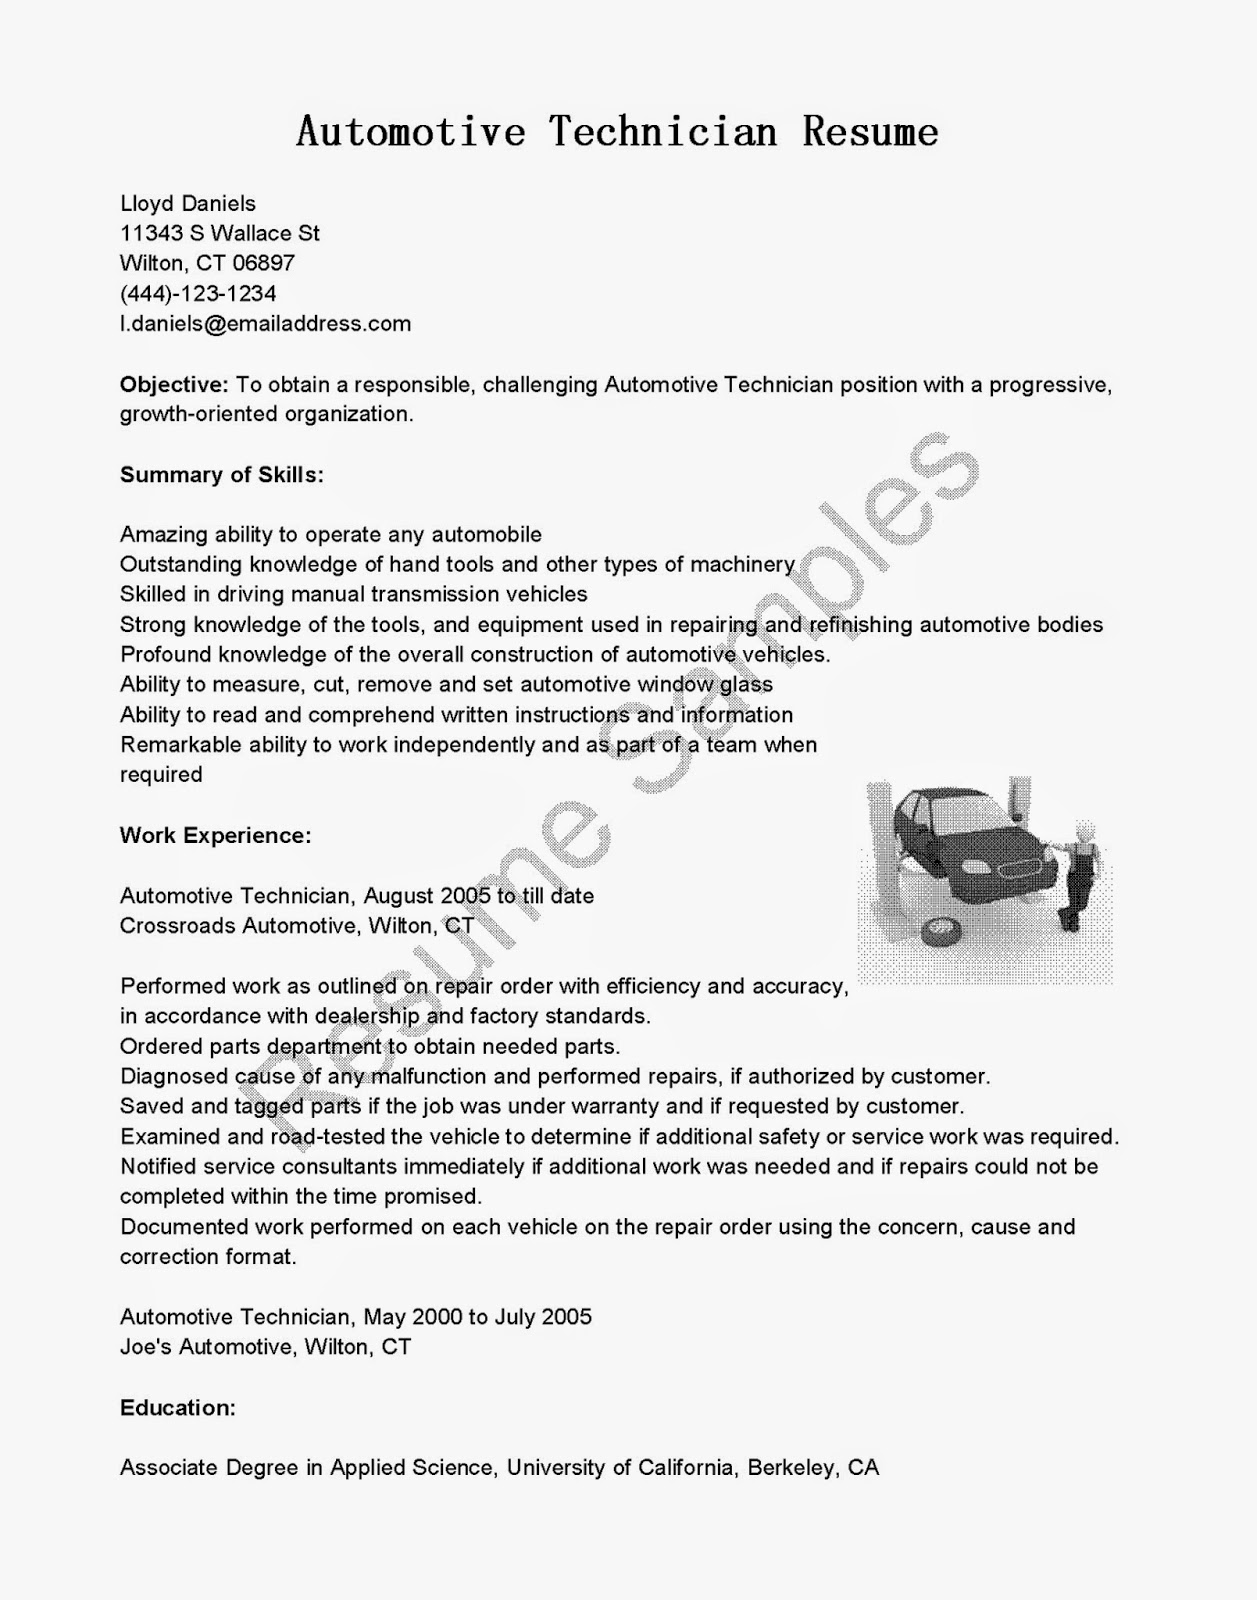 Auto technician sample resume